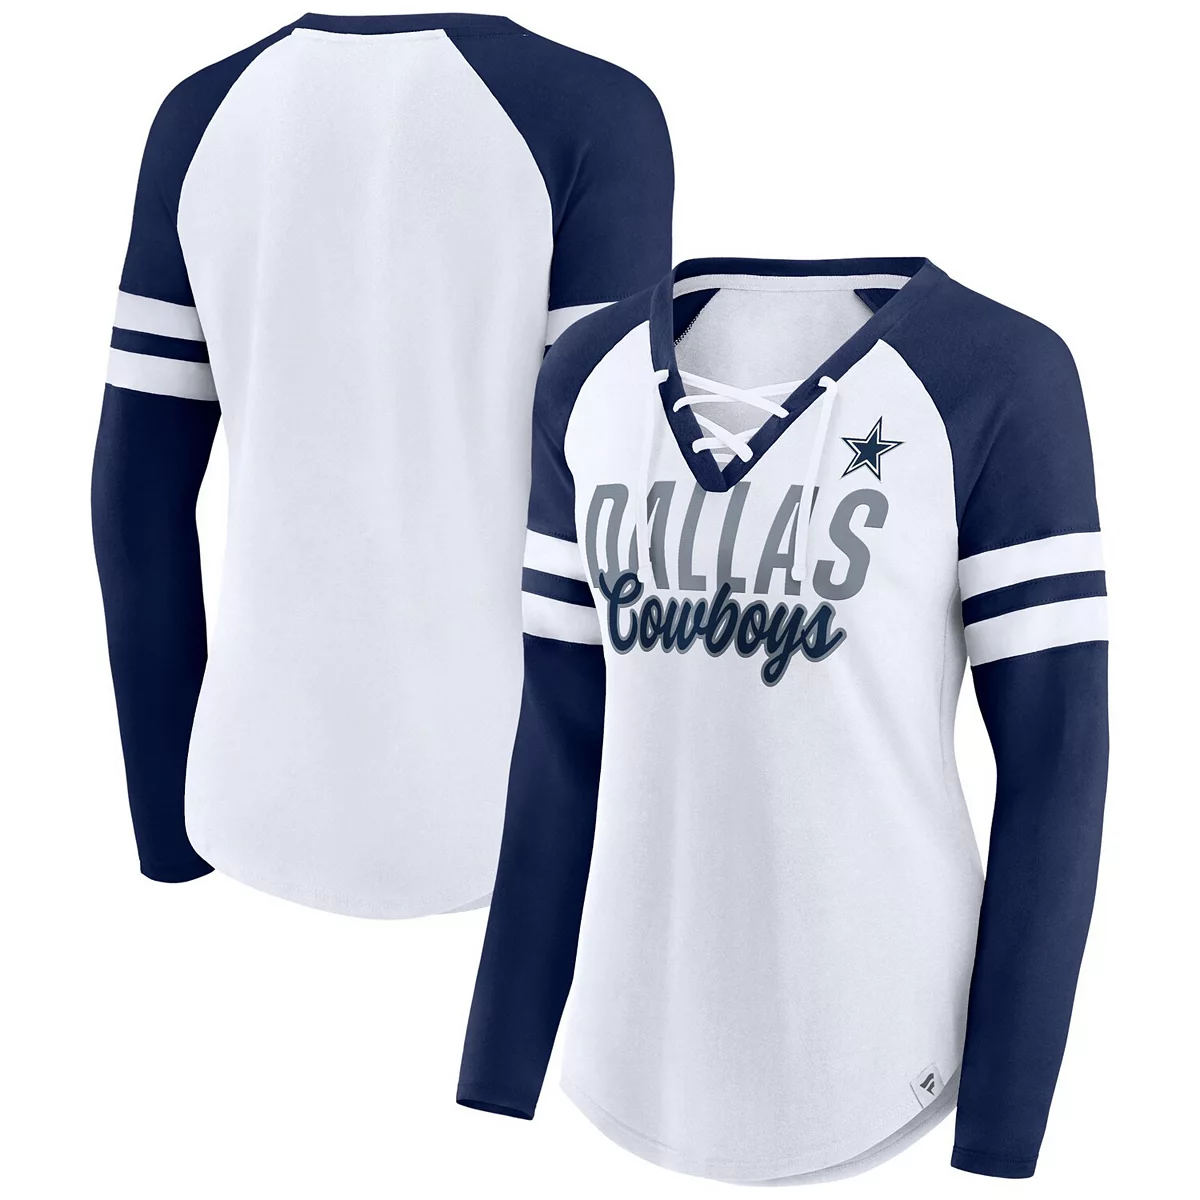 Women's Fanatics Branded White Philadelphia Eagles Sunday Best Lace-Up T- Shirt